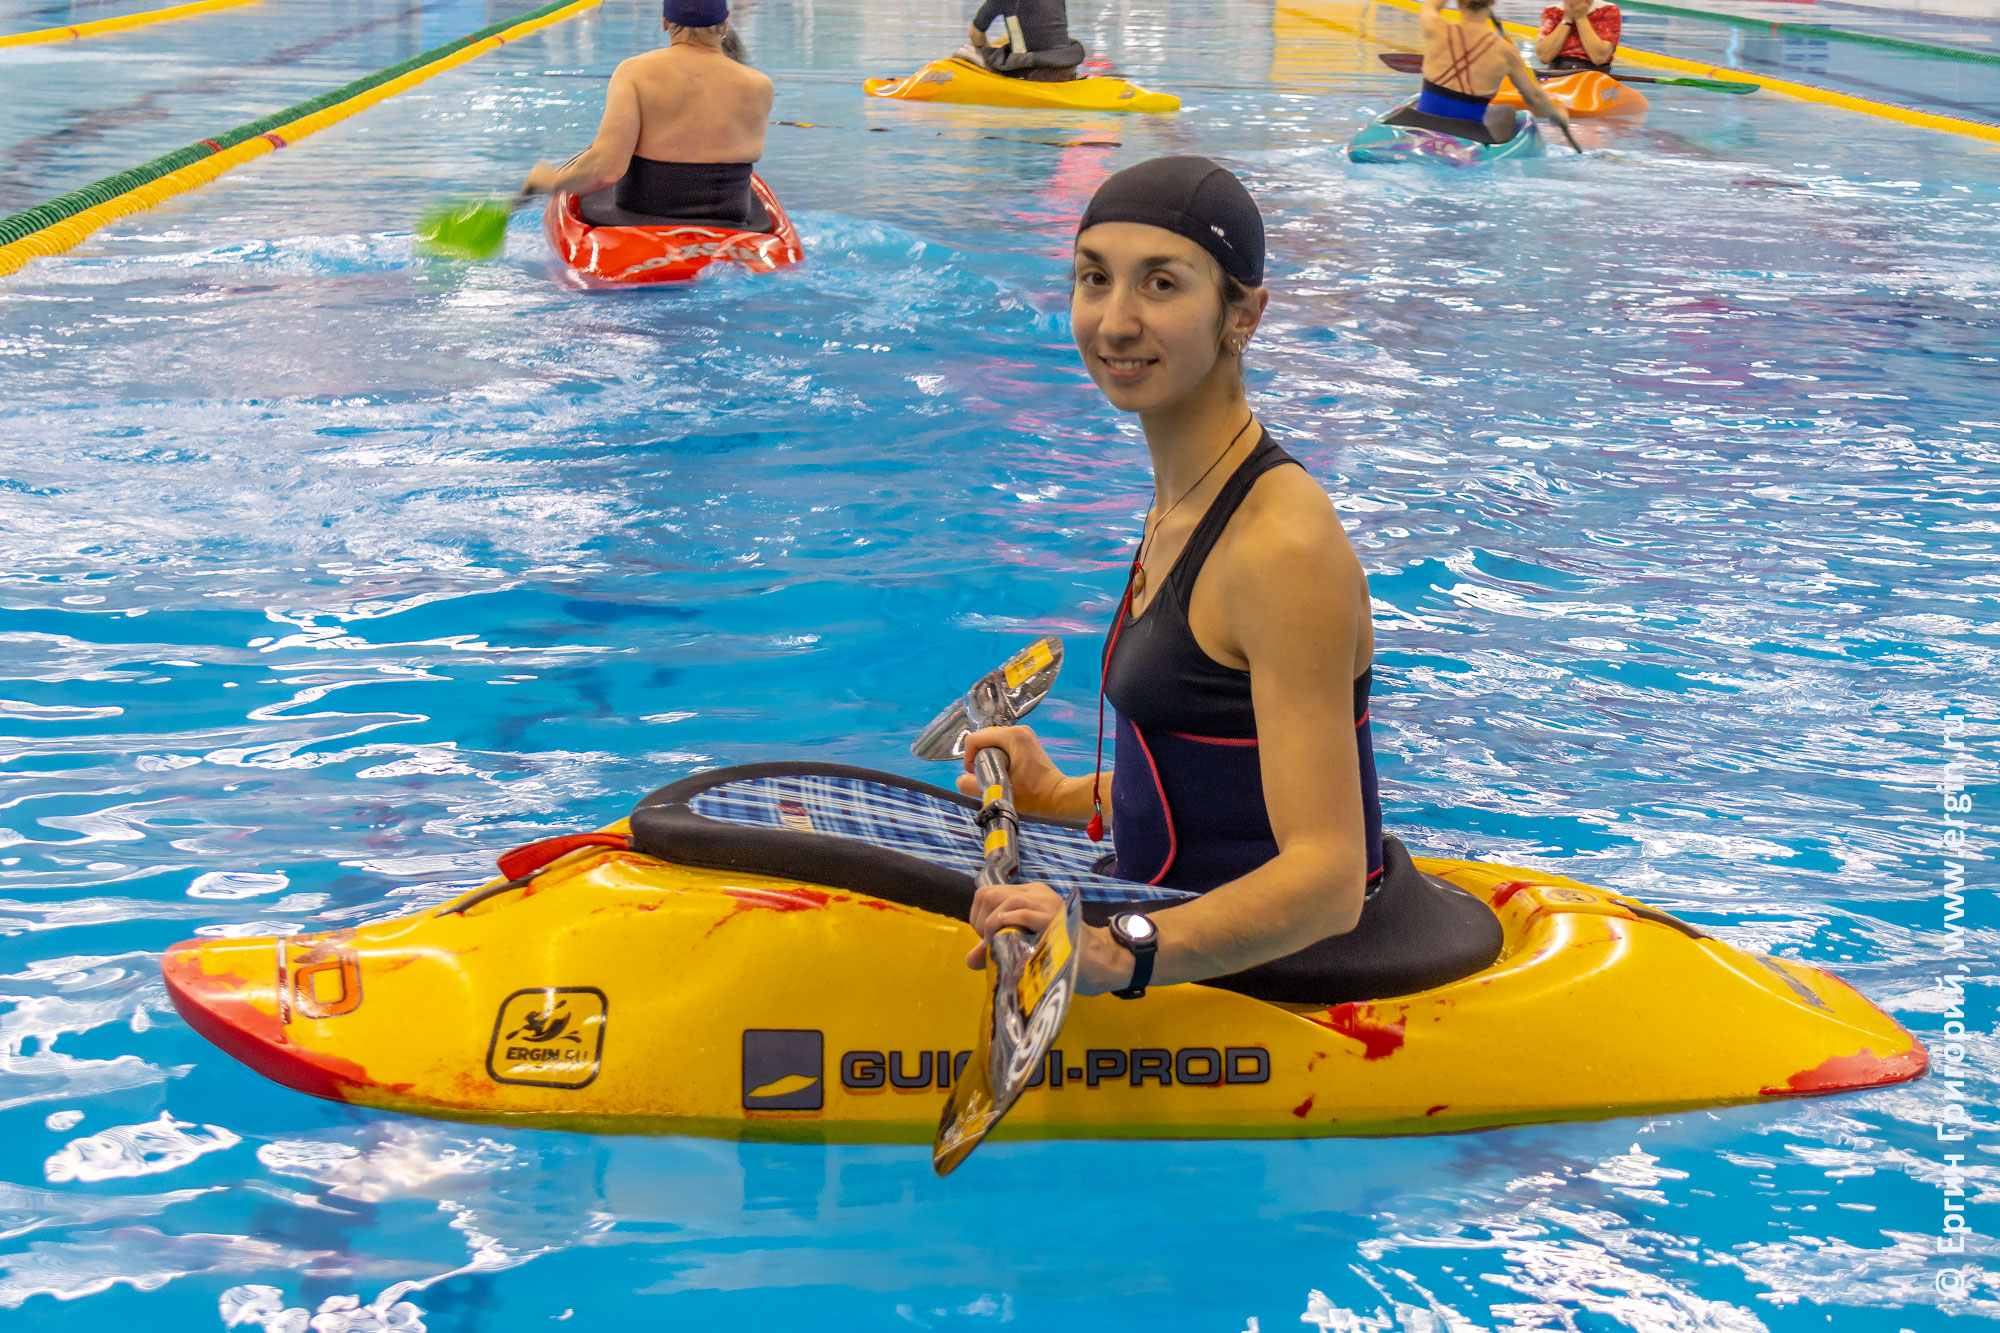 EXO Kayaks GuiGui-prod Helixir-2018 размера XS на тренировке в бассейне по фристайл-каякингу